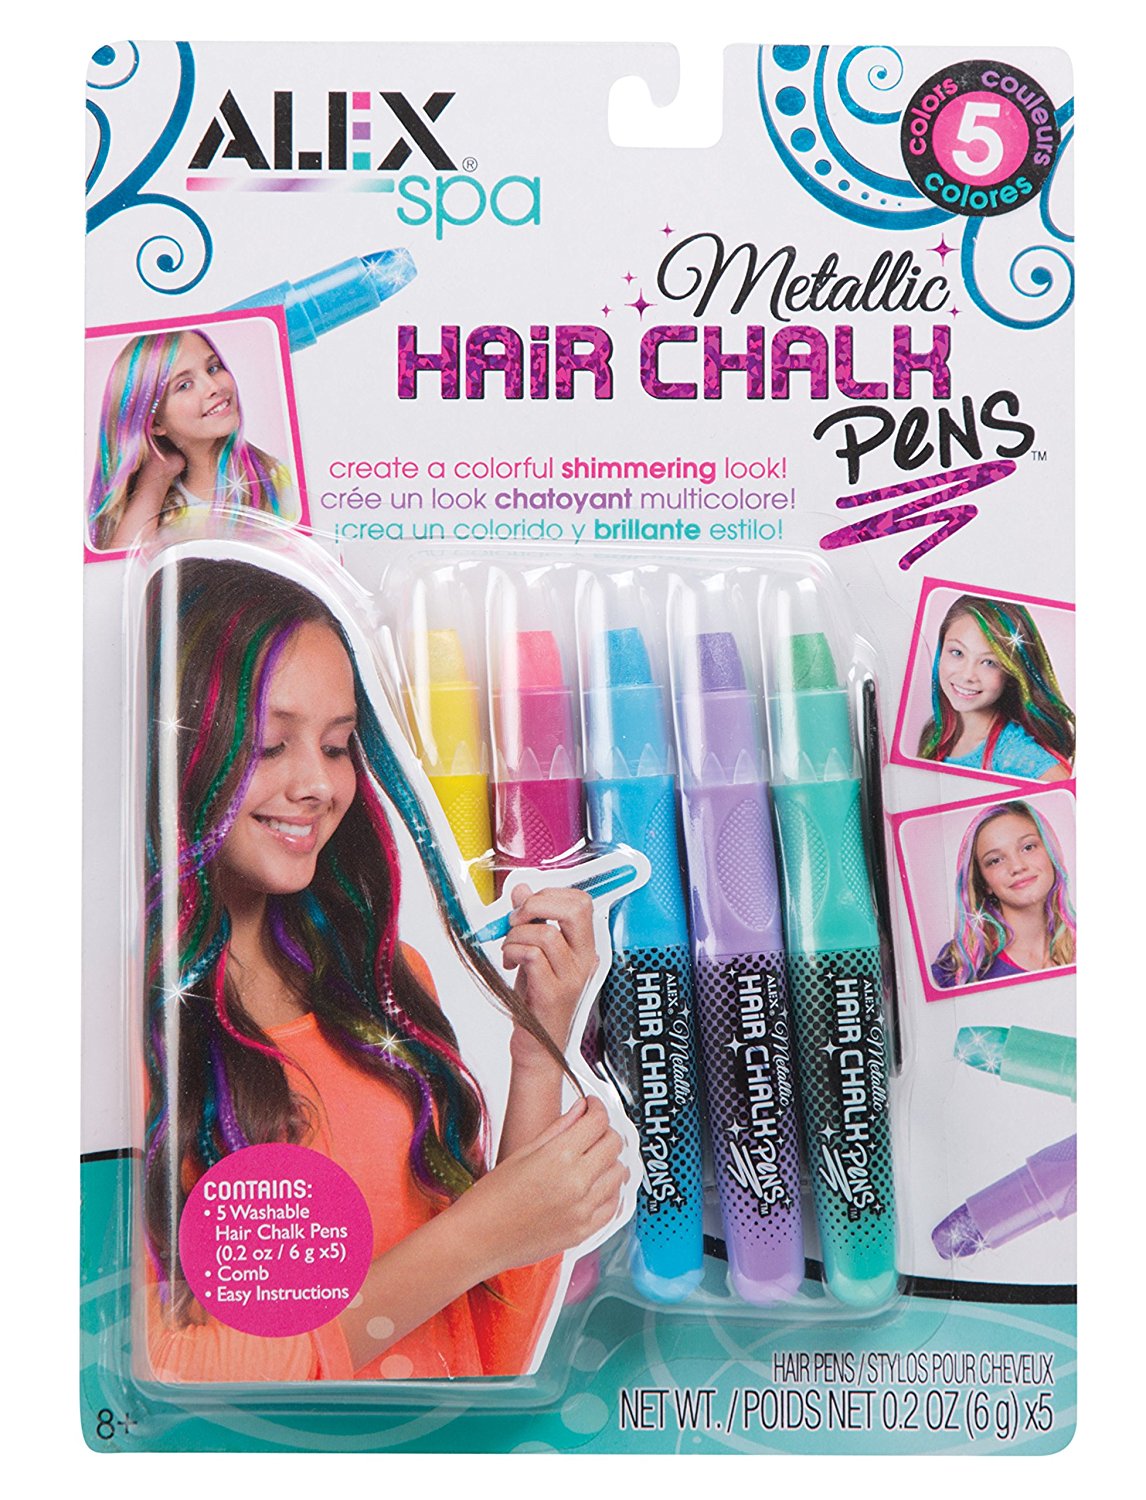 ALEX Toys Spa 5 Metallic Hair Chalk Pens Only $5.99! (Reg $10.99)